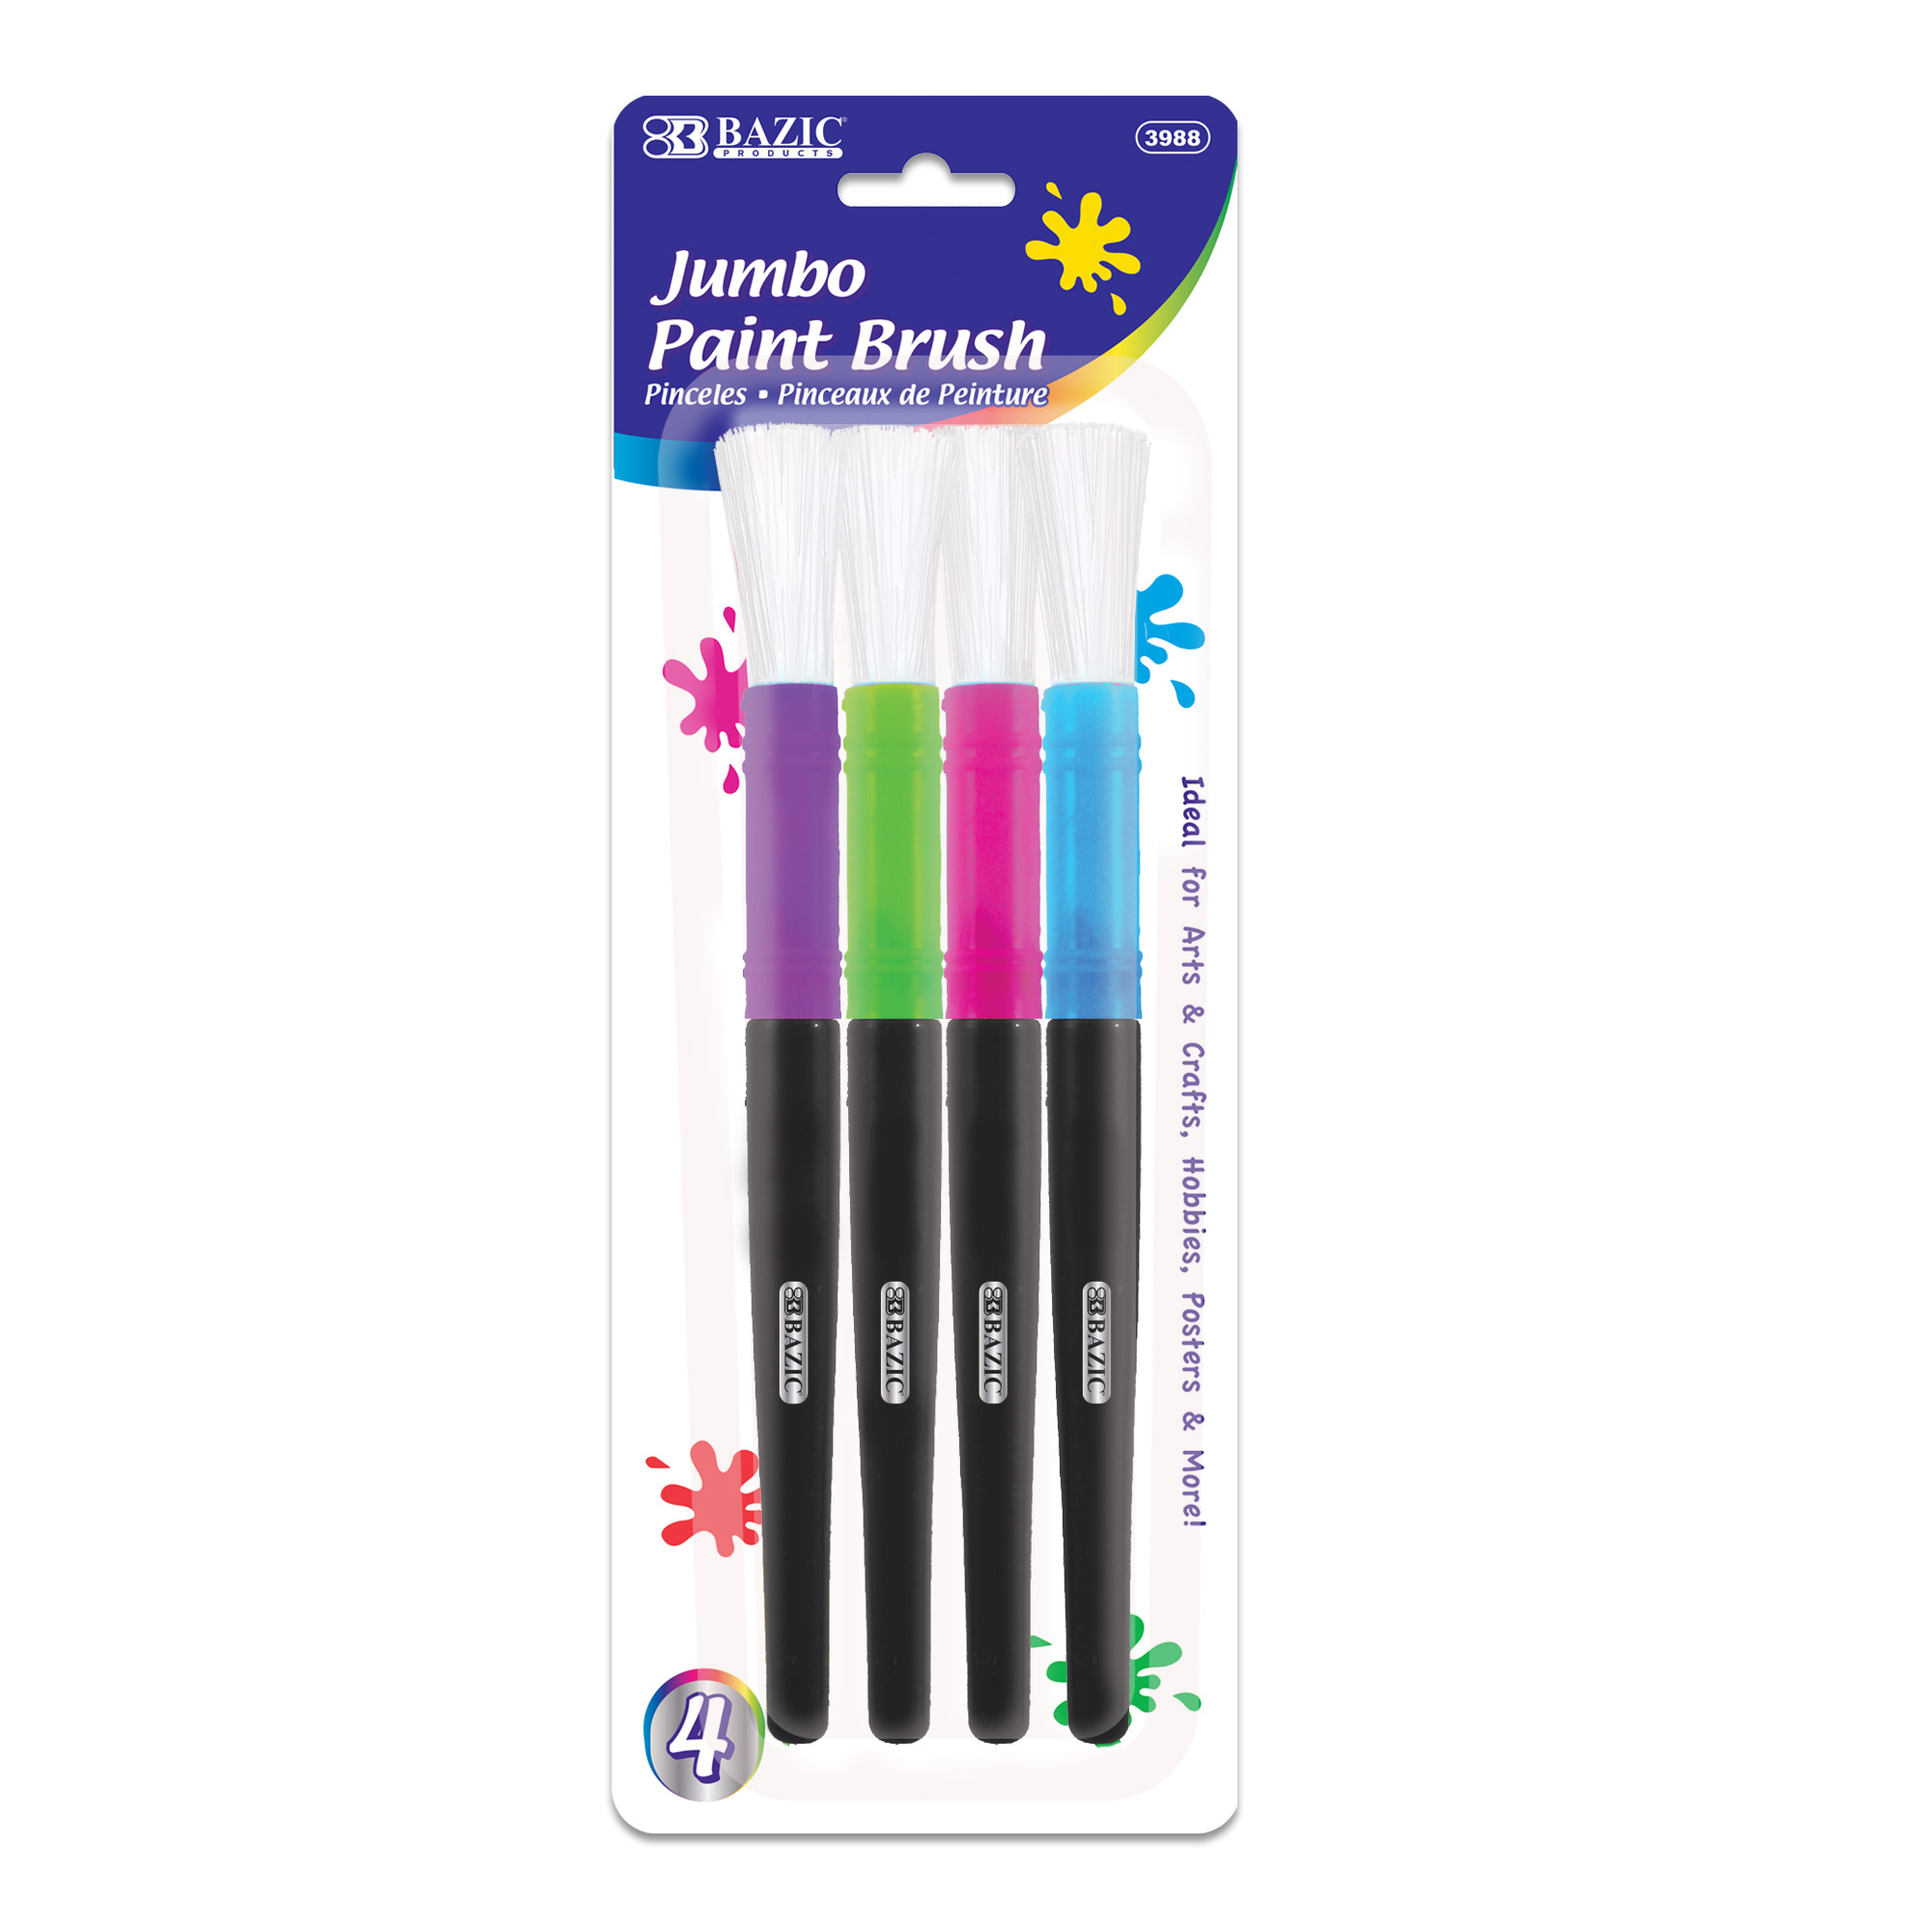 Small Craft Paint Brushes 1 Set / 144 Brushes